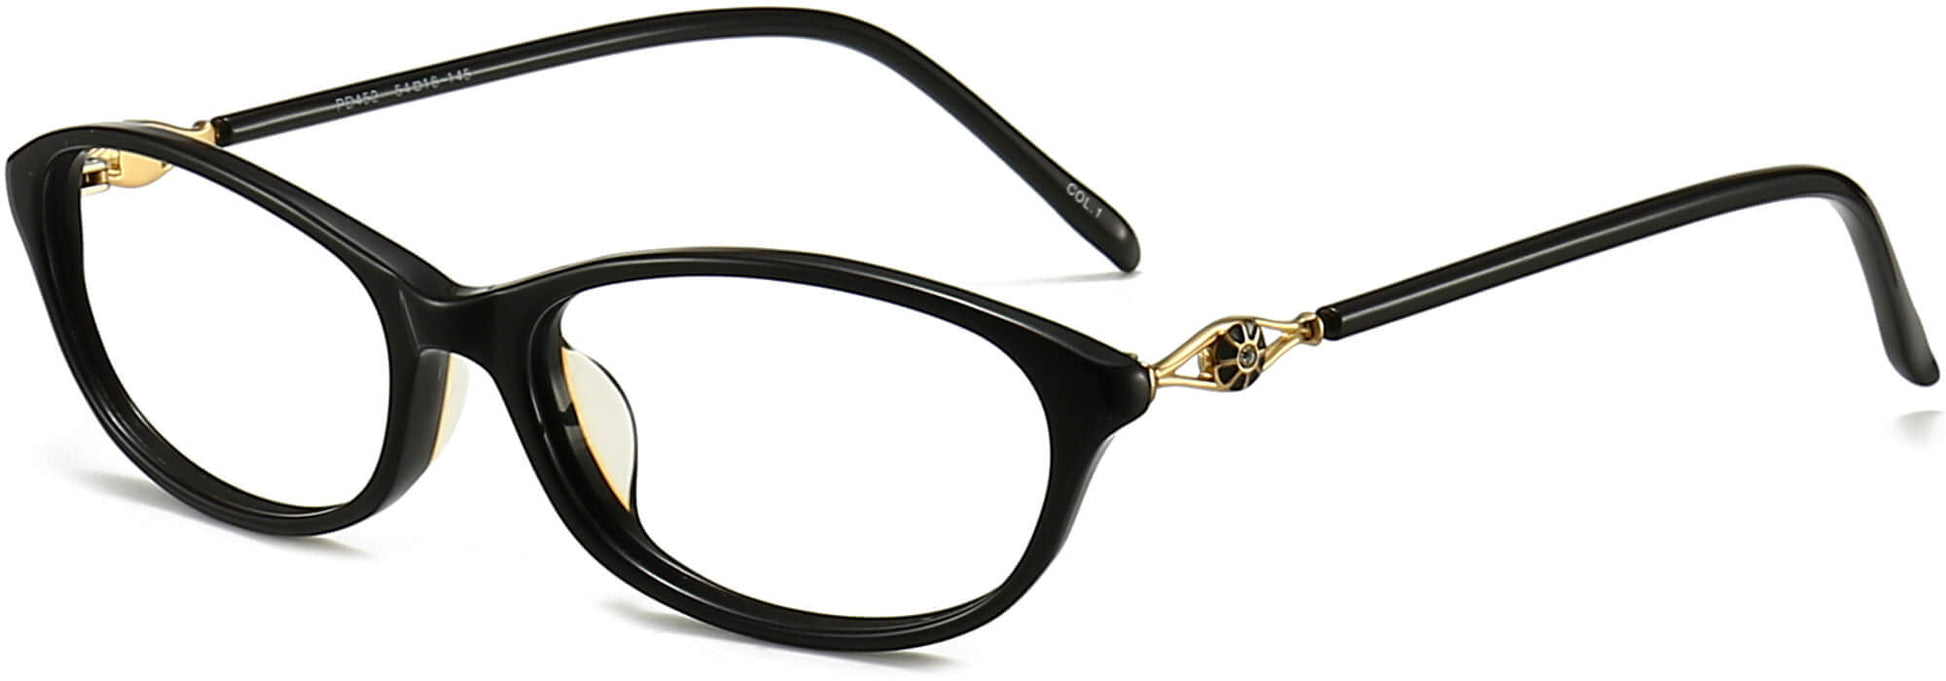 Ellis Cateye Black Eyeglasses from ANRRI, angle view